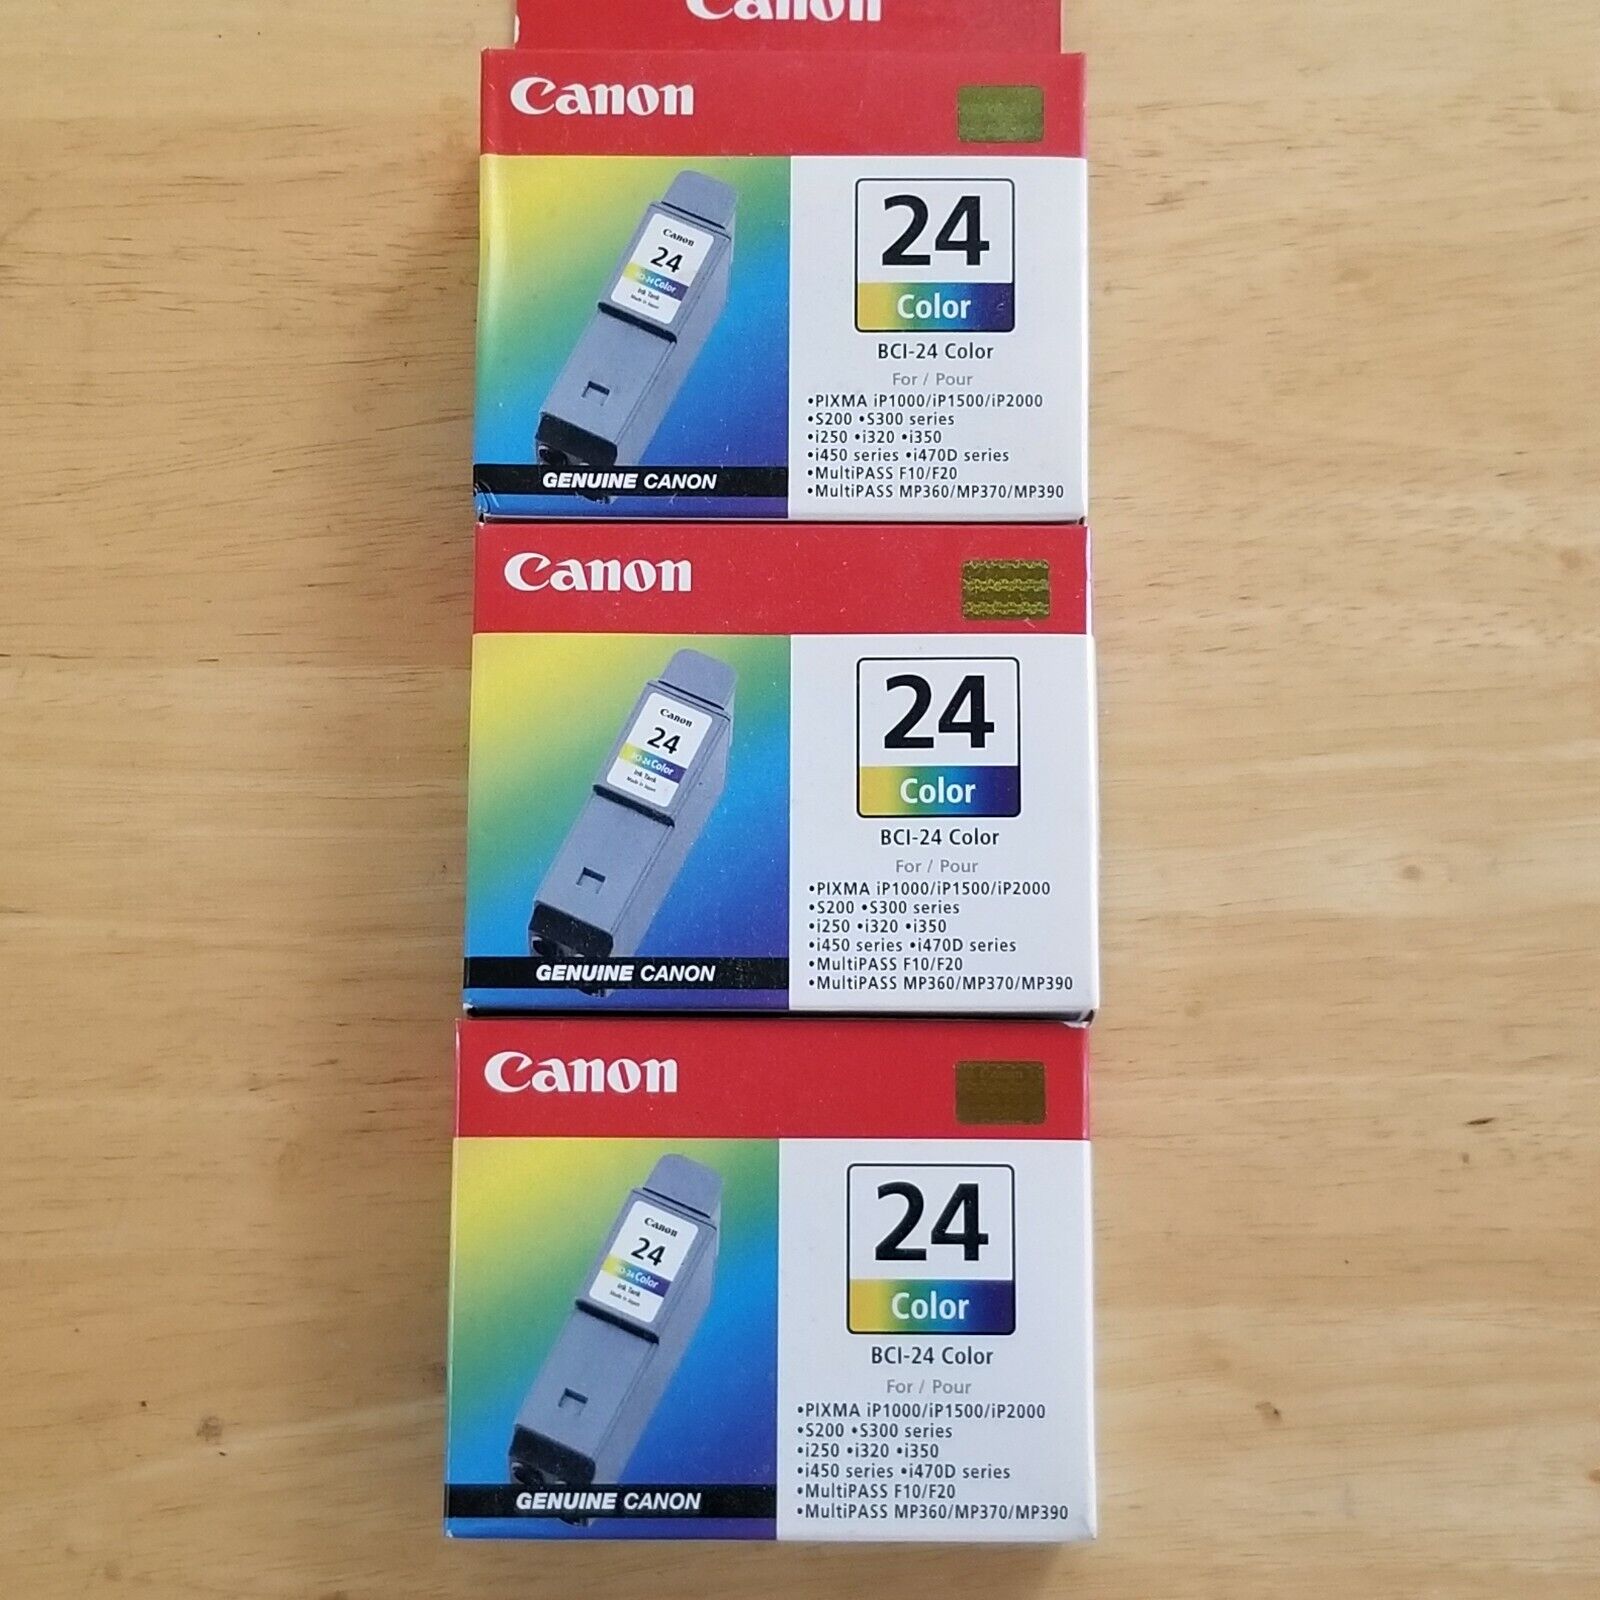 3 NEW Genuine Canon 24 Color - BCI-24 COLOR Ink Cartridge (Bulk Sale of 3 Units)